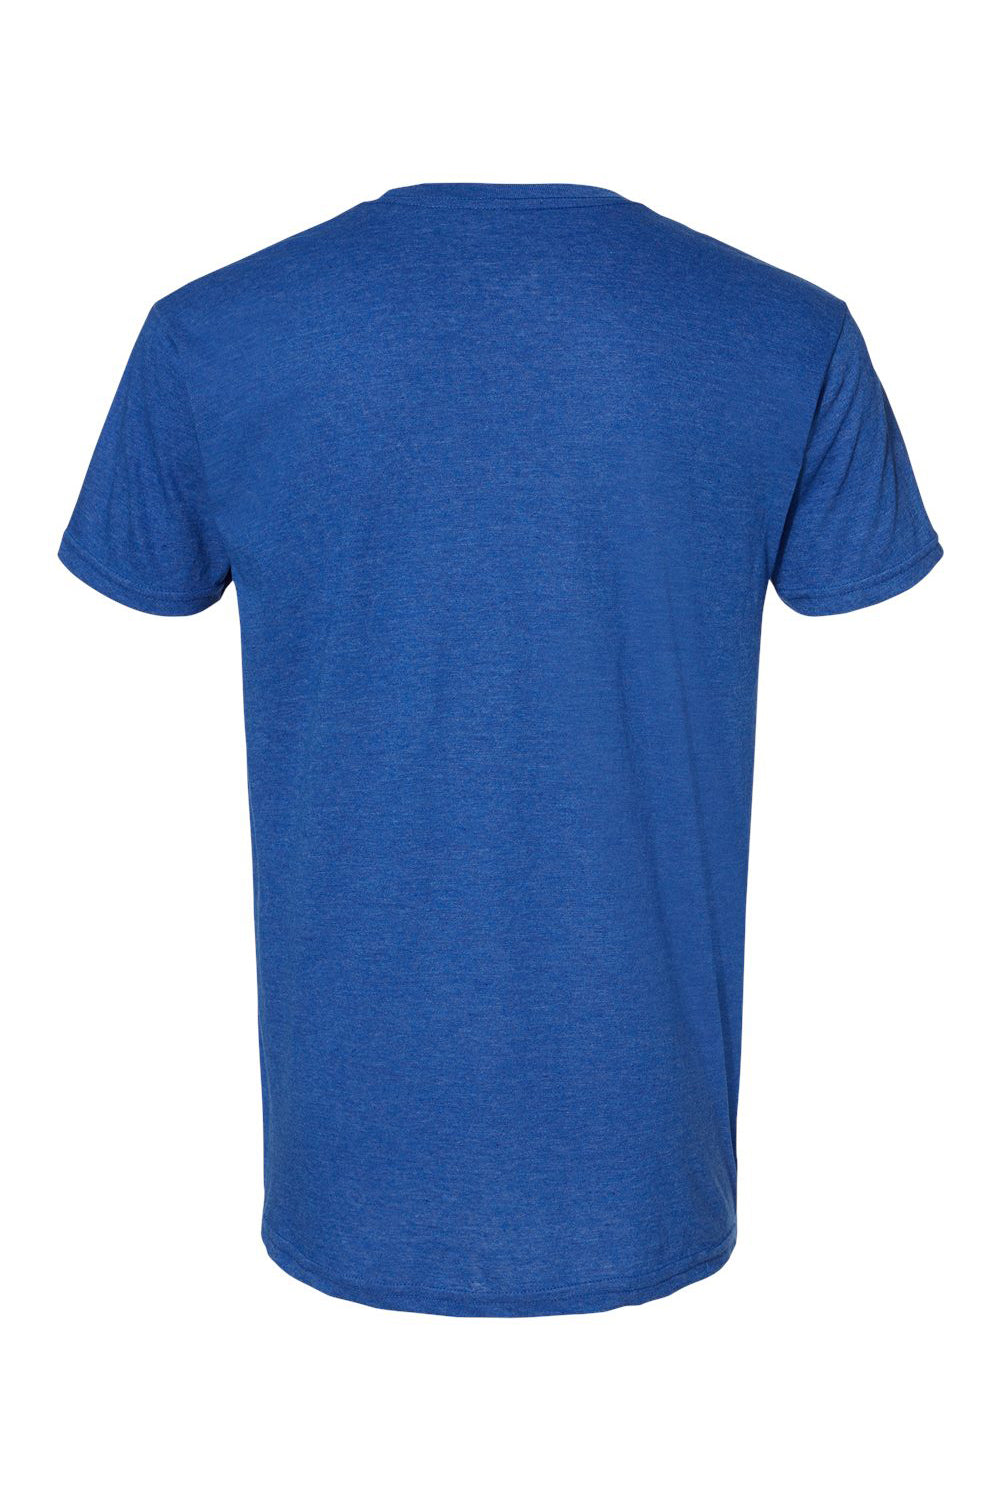 Bayside 5710 Mens USA Made Short Sleeve Crewneck T-Shirt Royal Blue Flat Back